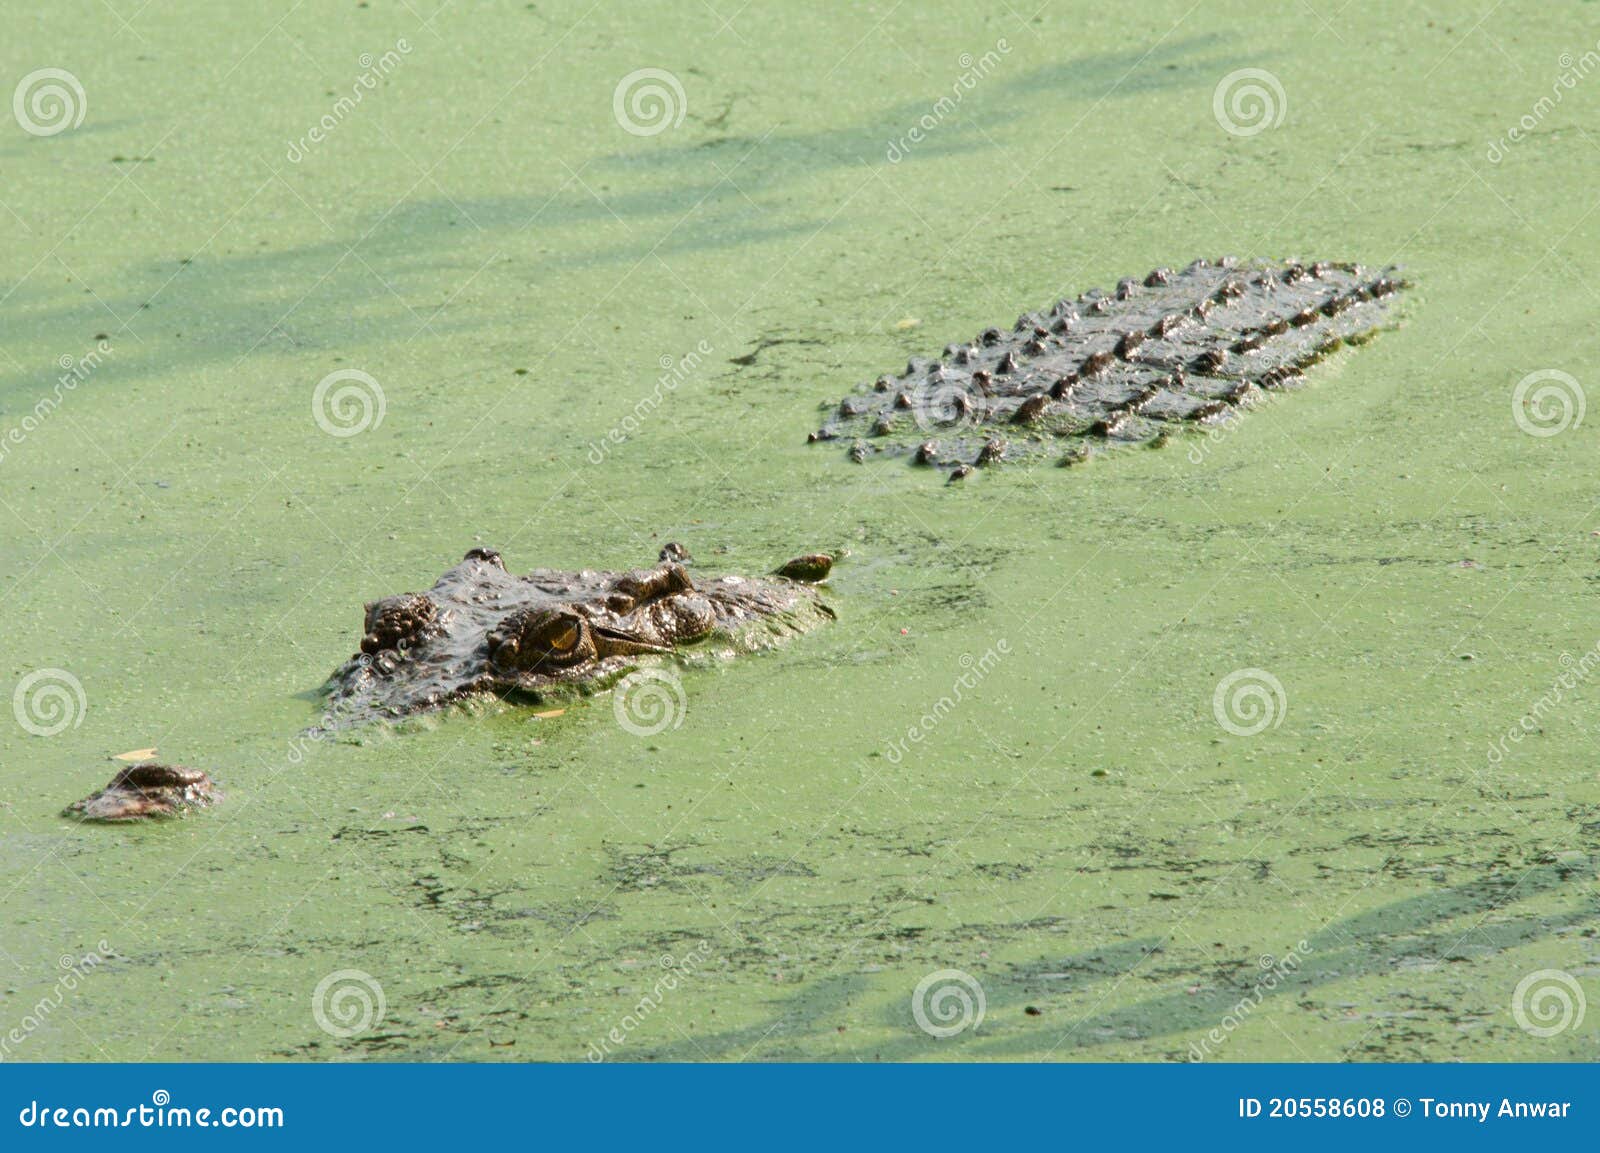 ferocious crocodile